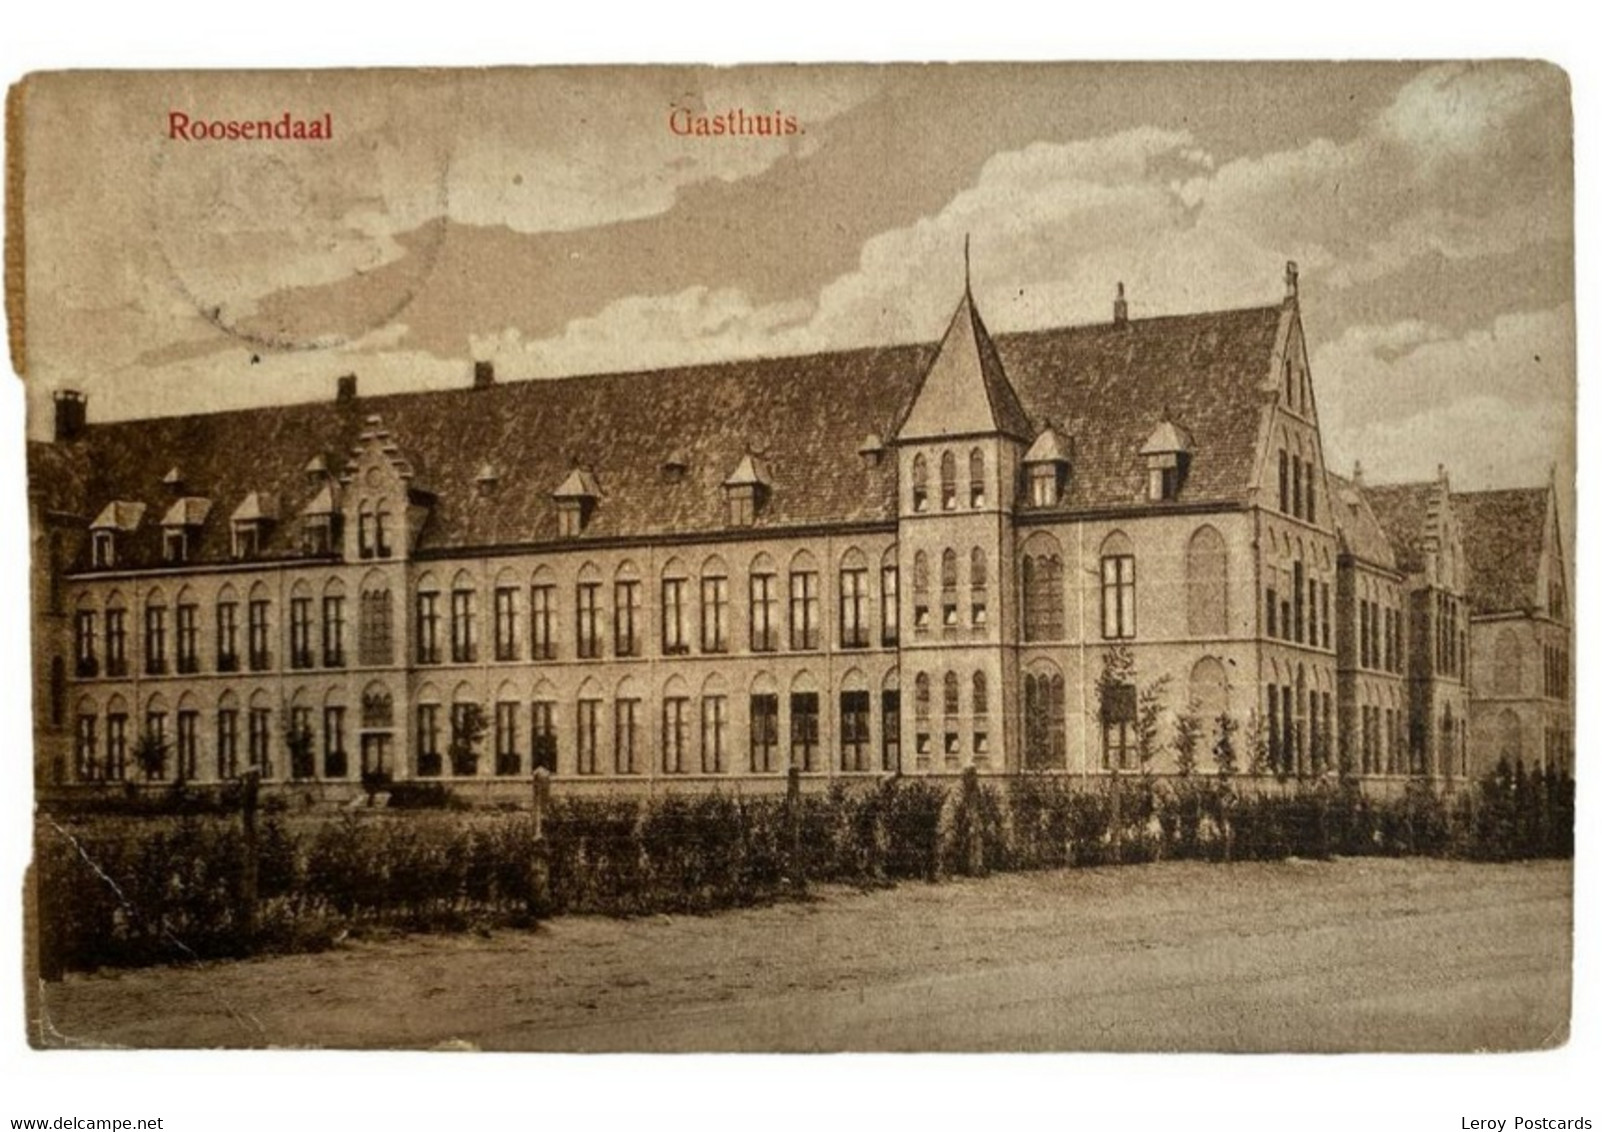 #1691 - Roosendaal, Gasthuis 1913 (NB) - Roosendaal